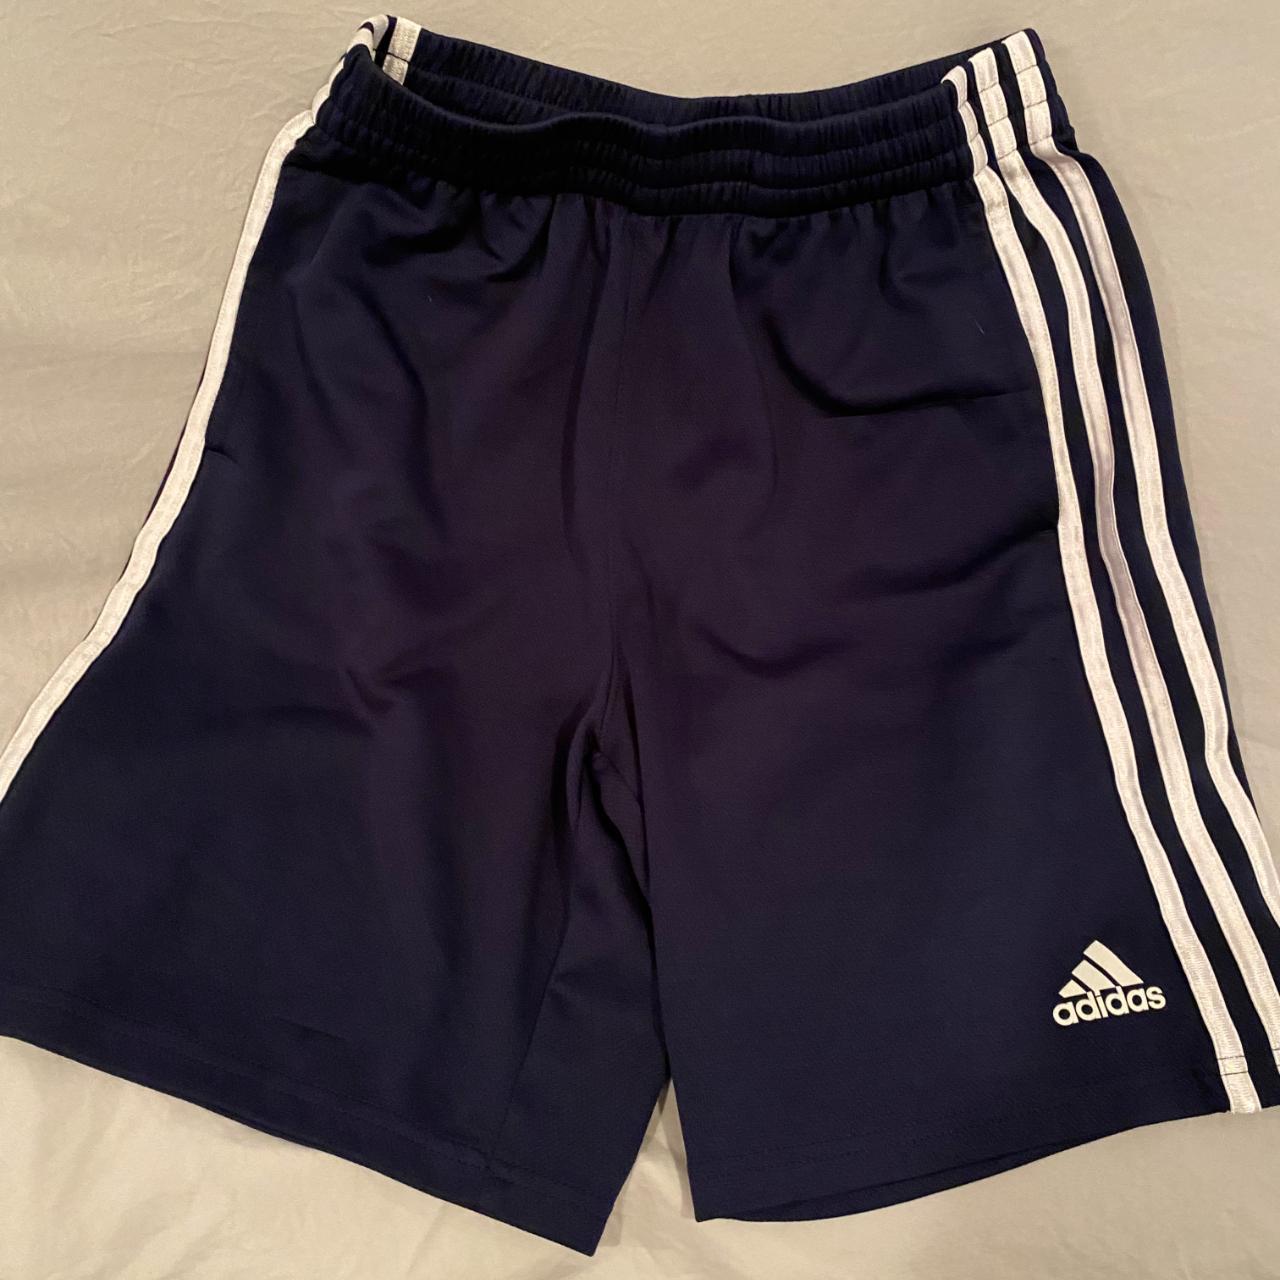 Youth LG (14/16) Navy Blue Adidas shorts - Depop